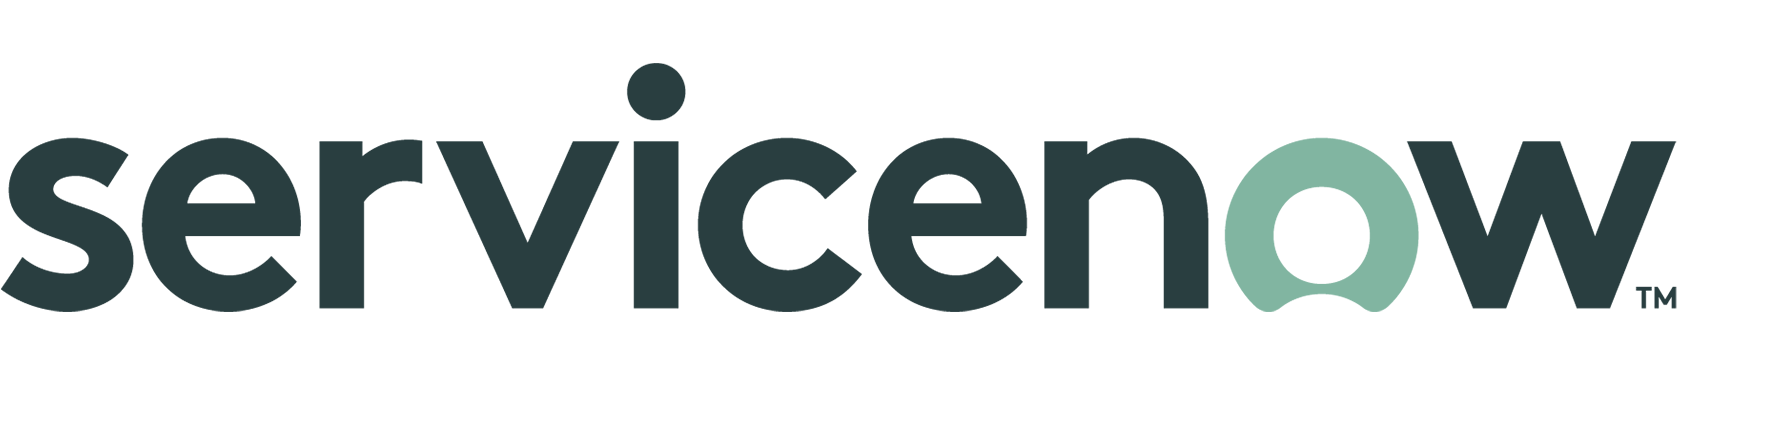 ServiceNow-green-logo